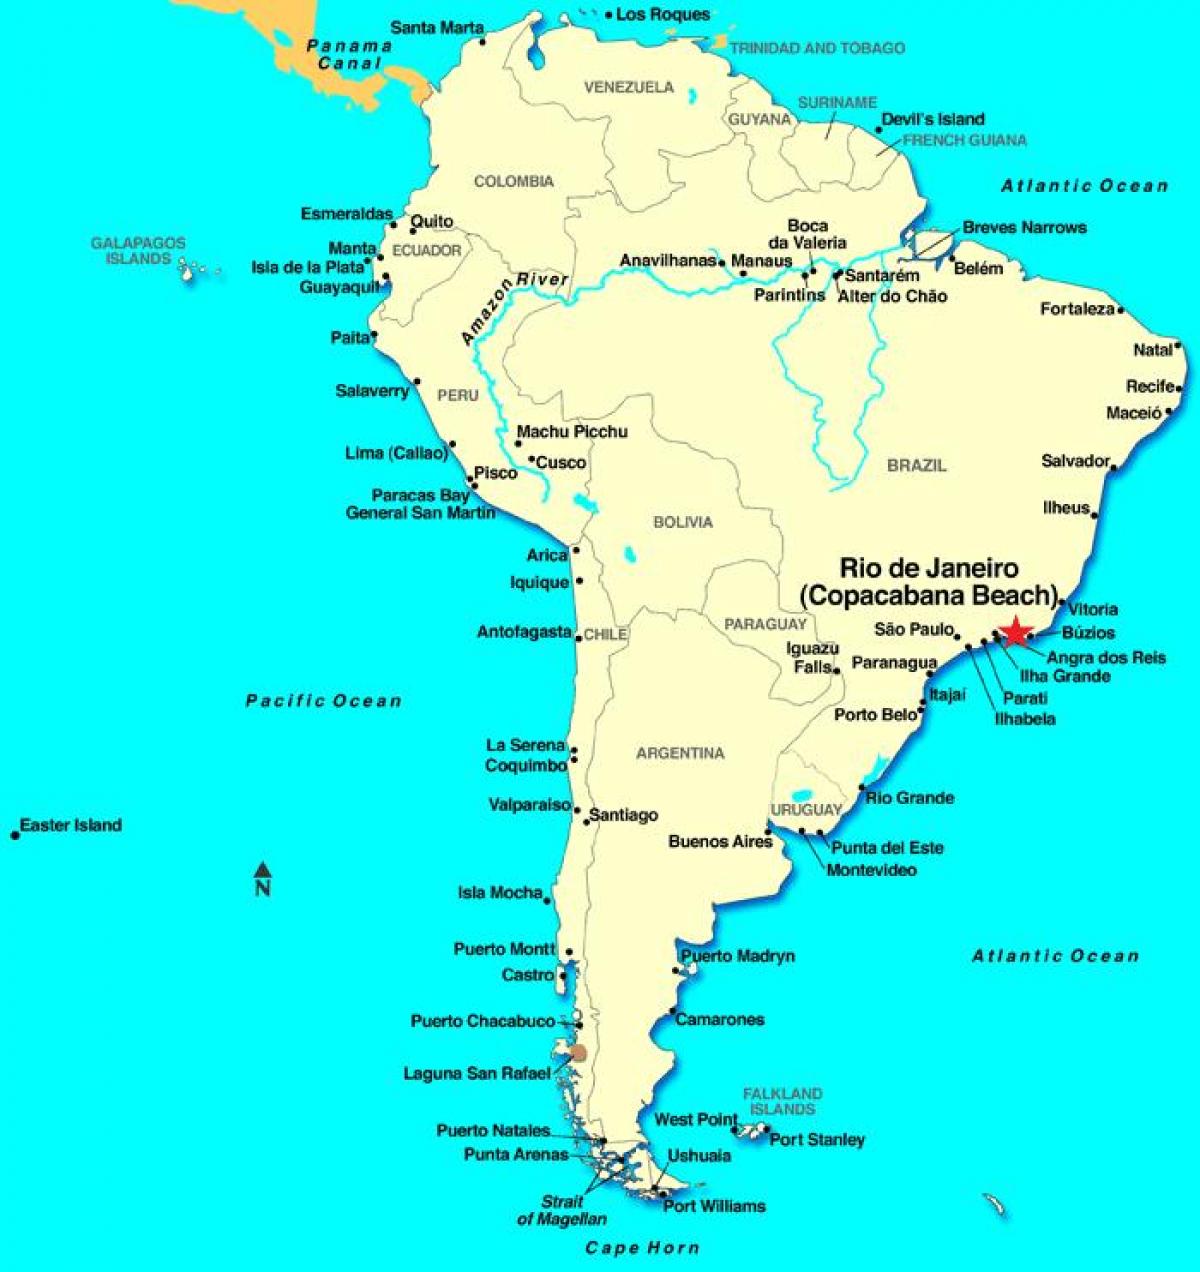 Güney Amerika'da Rio de Janeiro haritası